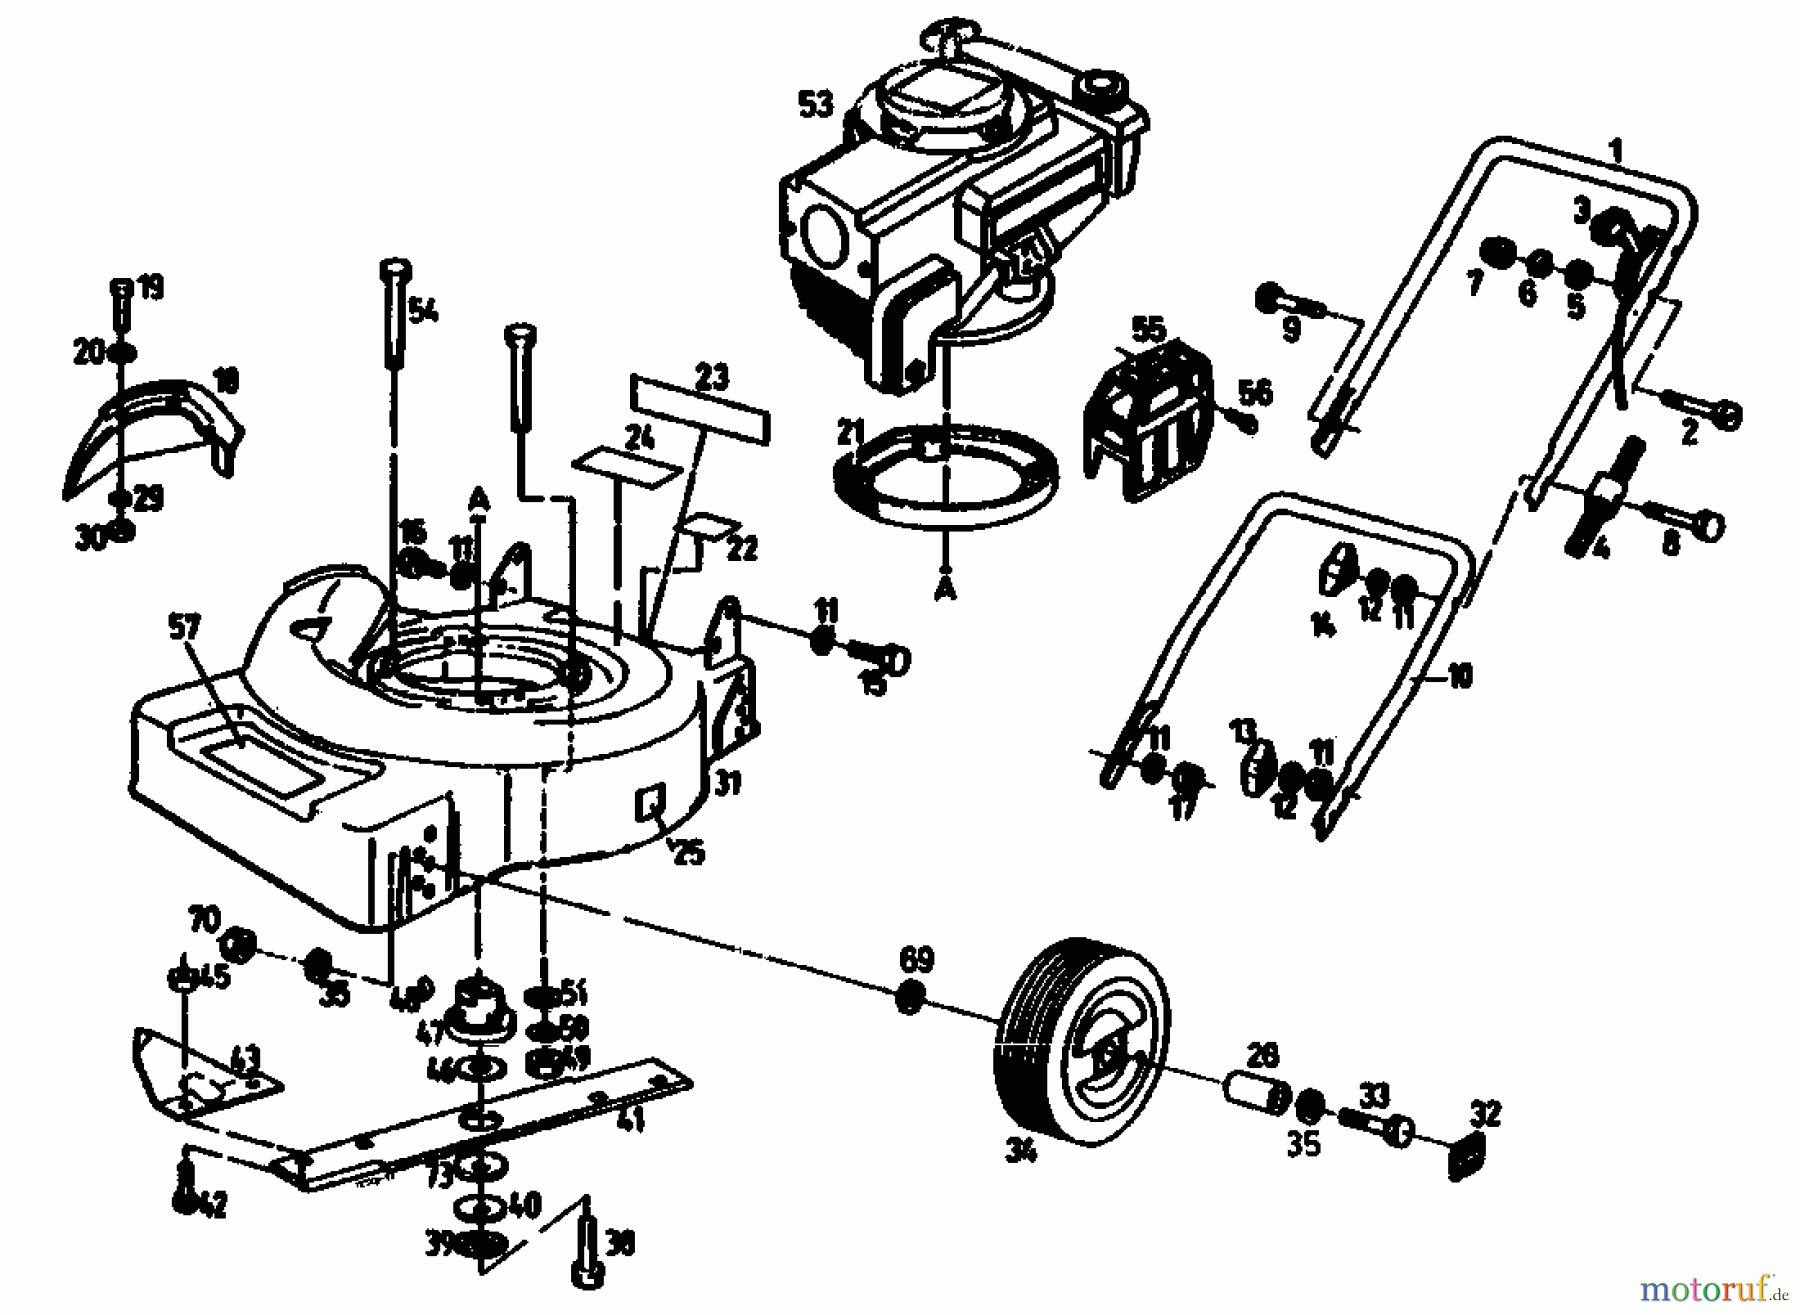  Golf Petrol mower 248 S 4 02670.01  (1991) Basic machine